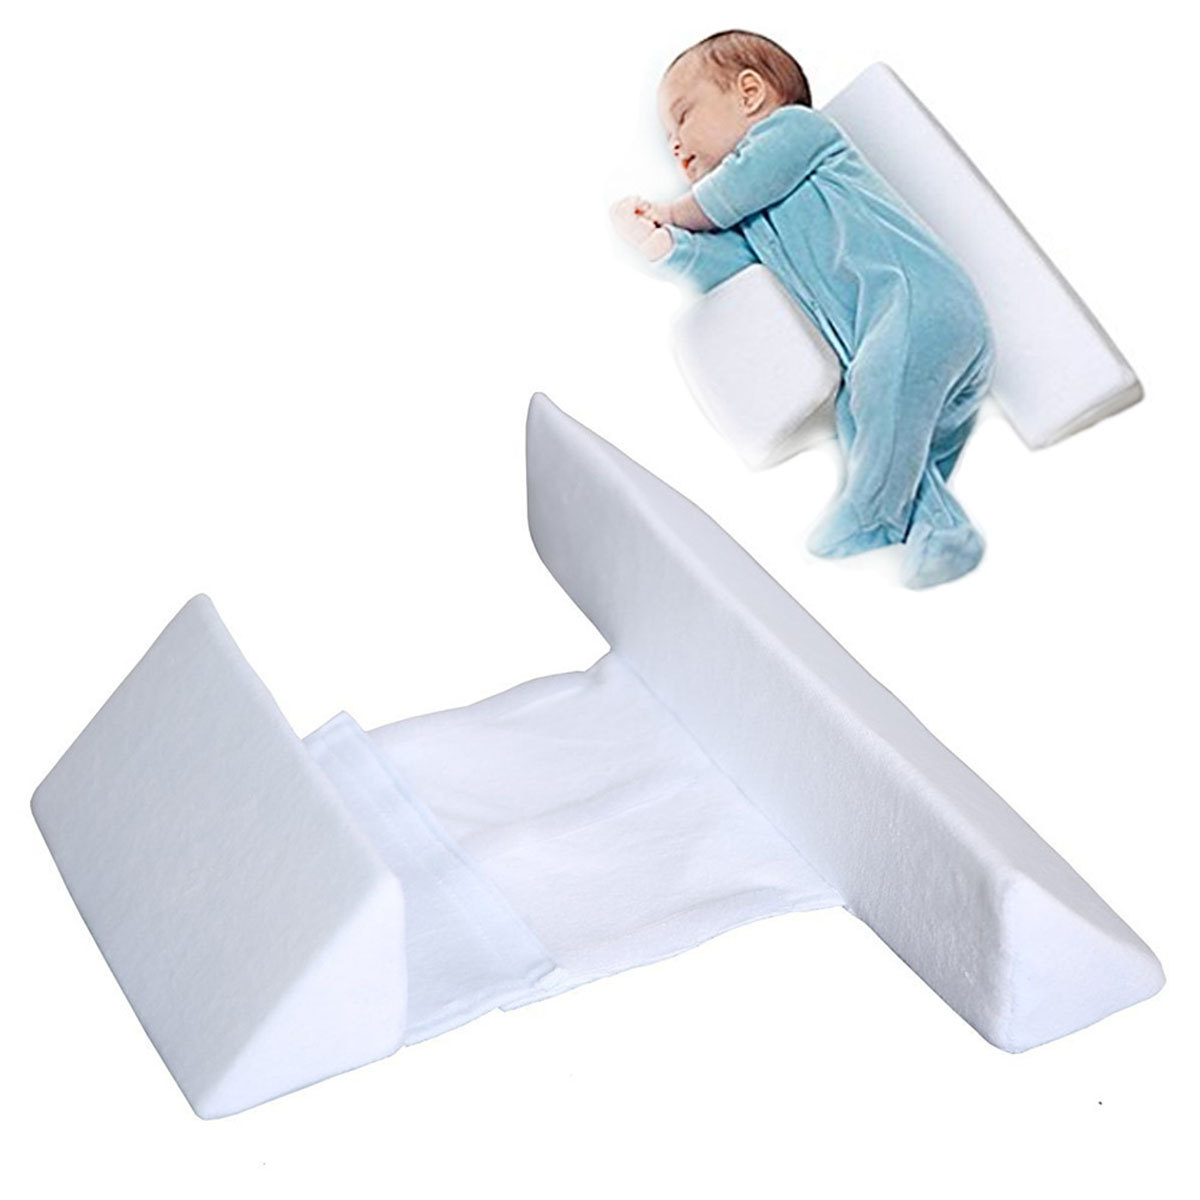 Baby Newborn Infant Pillow Memory Foam Positioner Prevent Flat Head Anti Roll US 